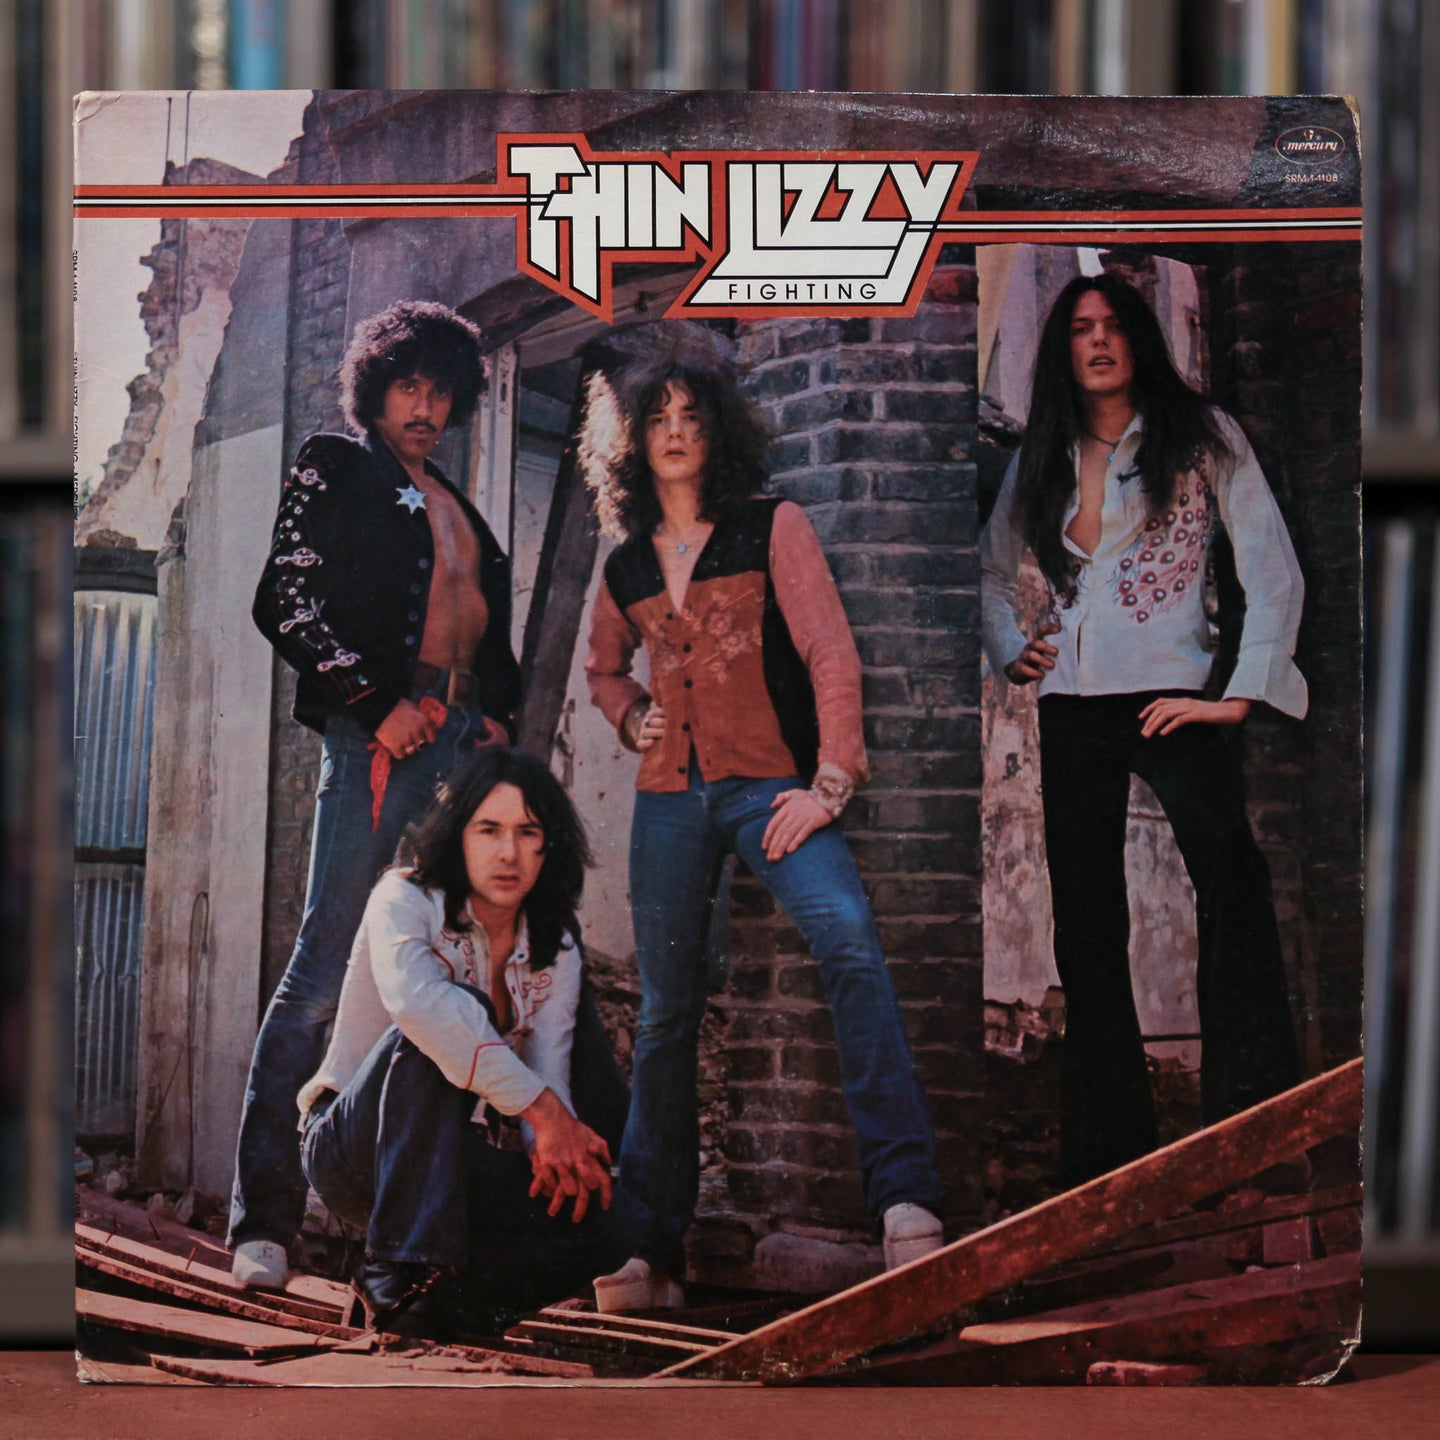 Thin Lizzy - Fighting - 1976 Mercury, VG/VG